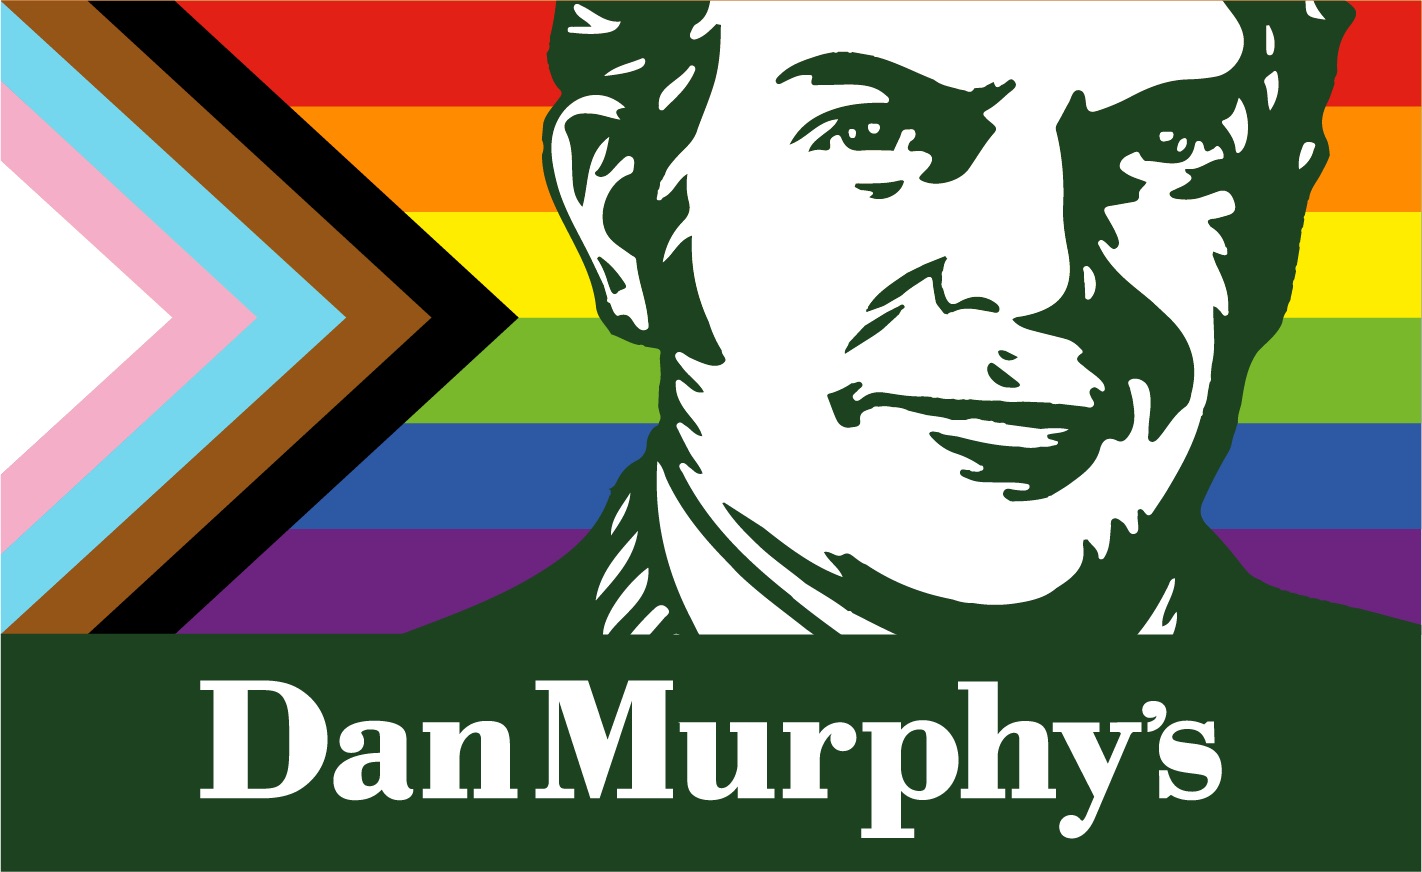 Dan Murphy's logo